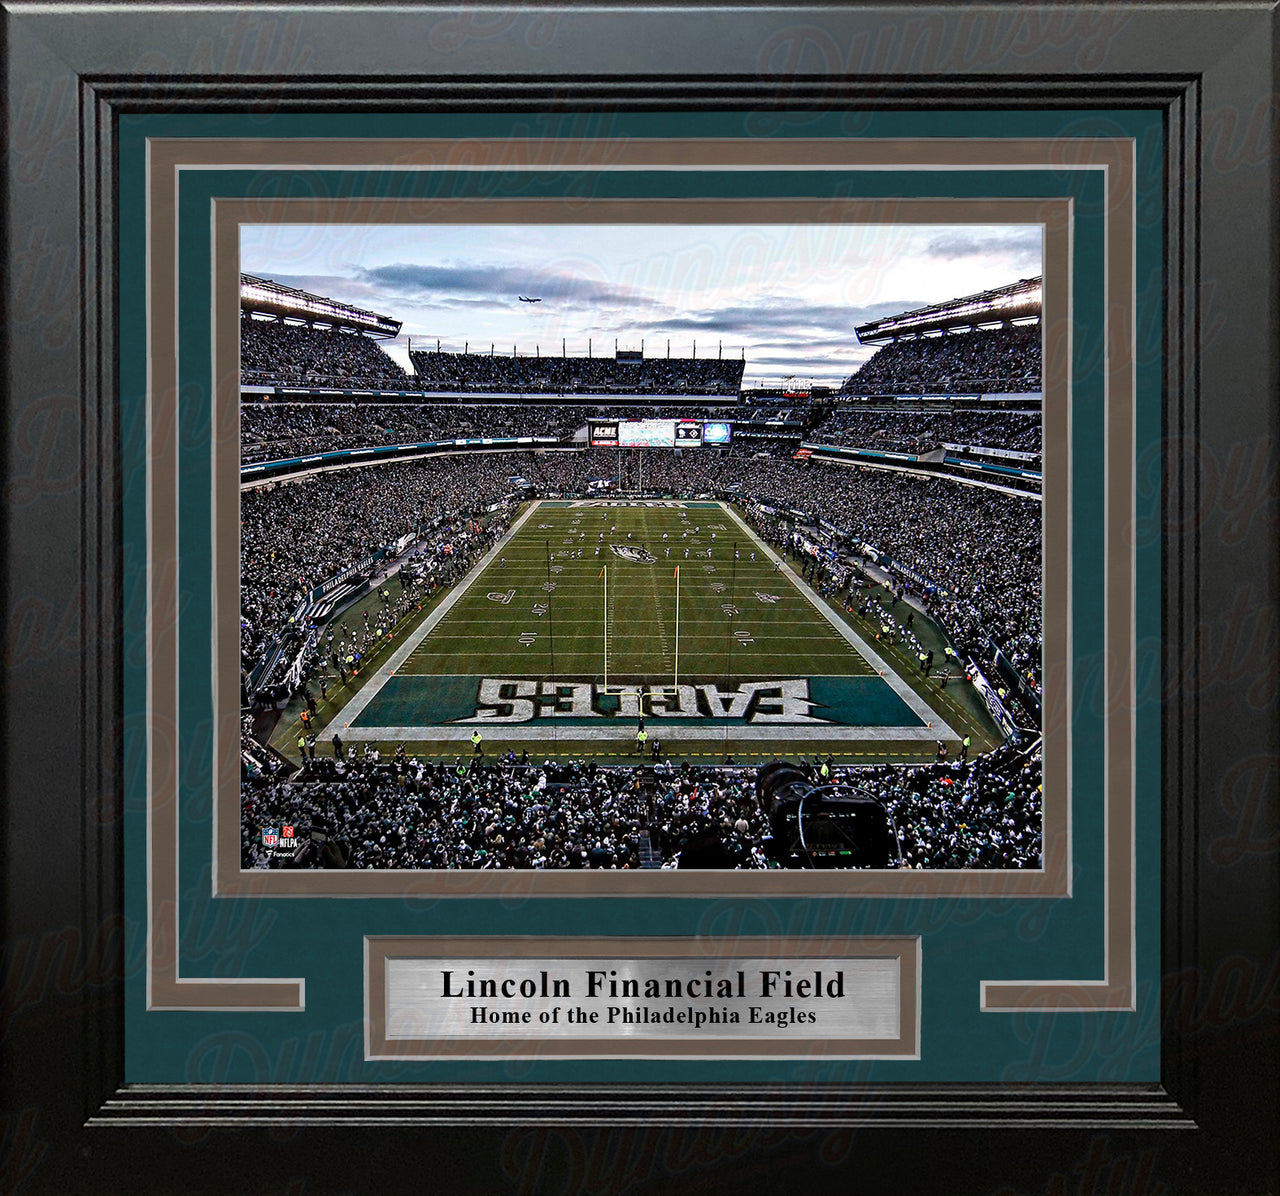 Philadelphia Eagles Lincoln Financial Field End Zone View 8" x 10" Framed Football Stadium Photo - Dynasty Sports & Framing 